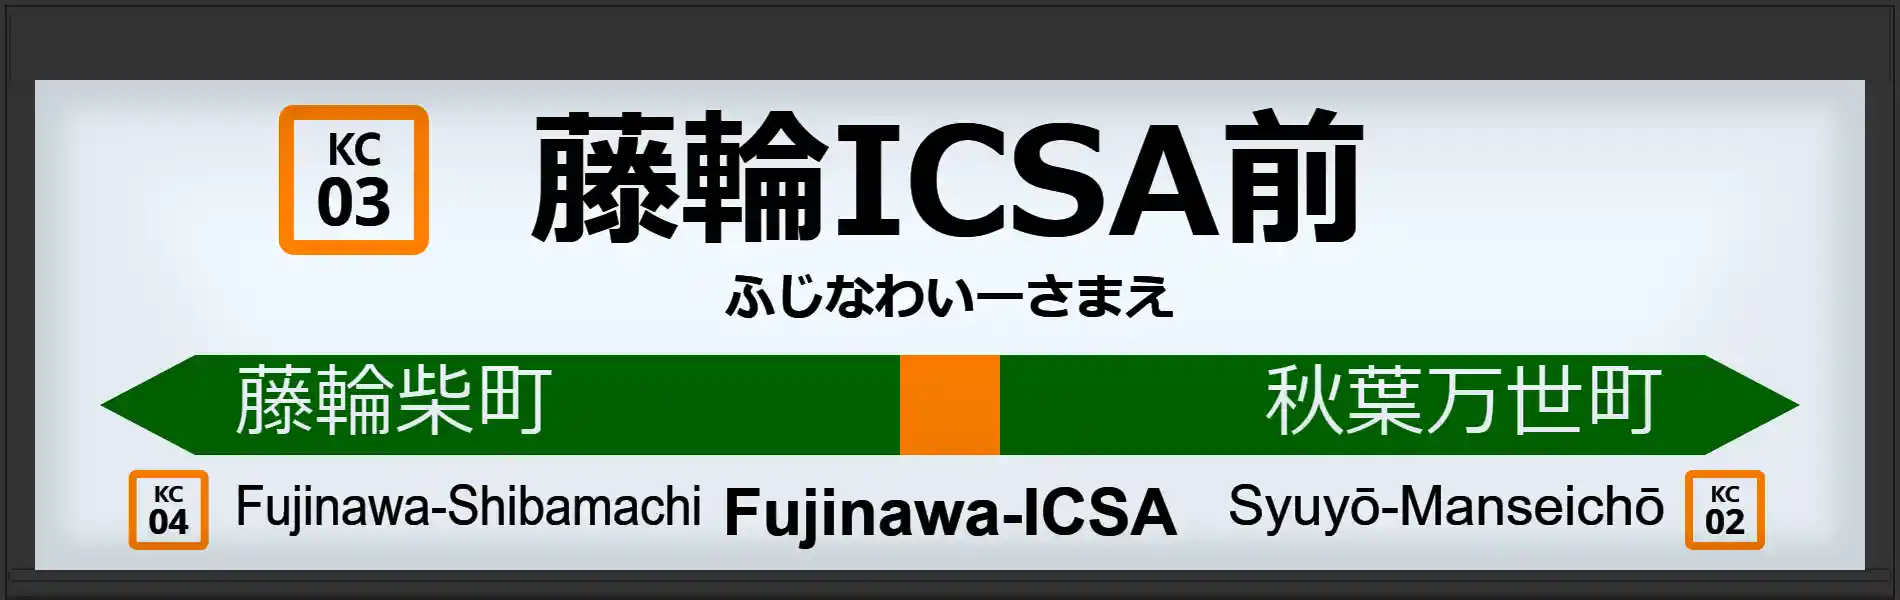 KC03 藤輪ICSA前駅.png